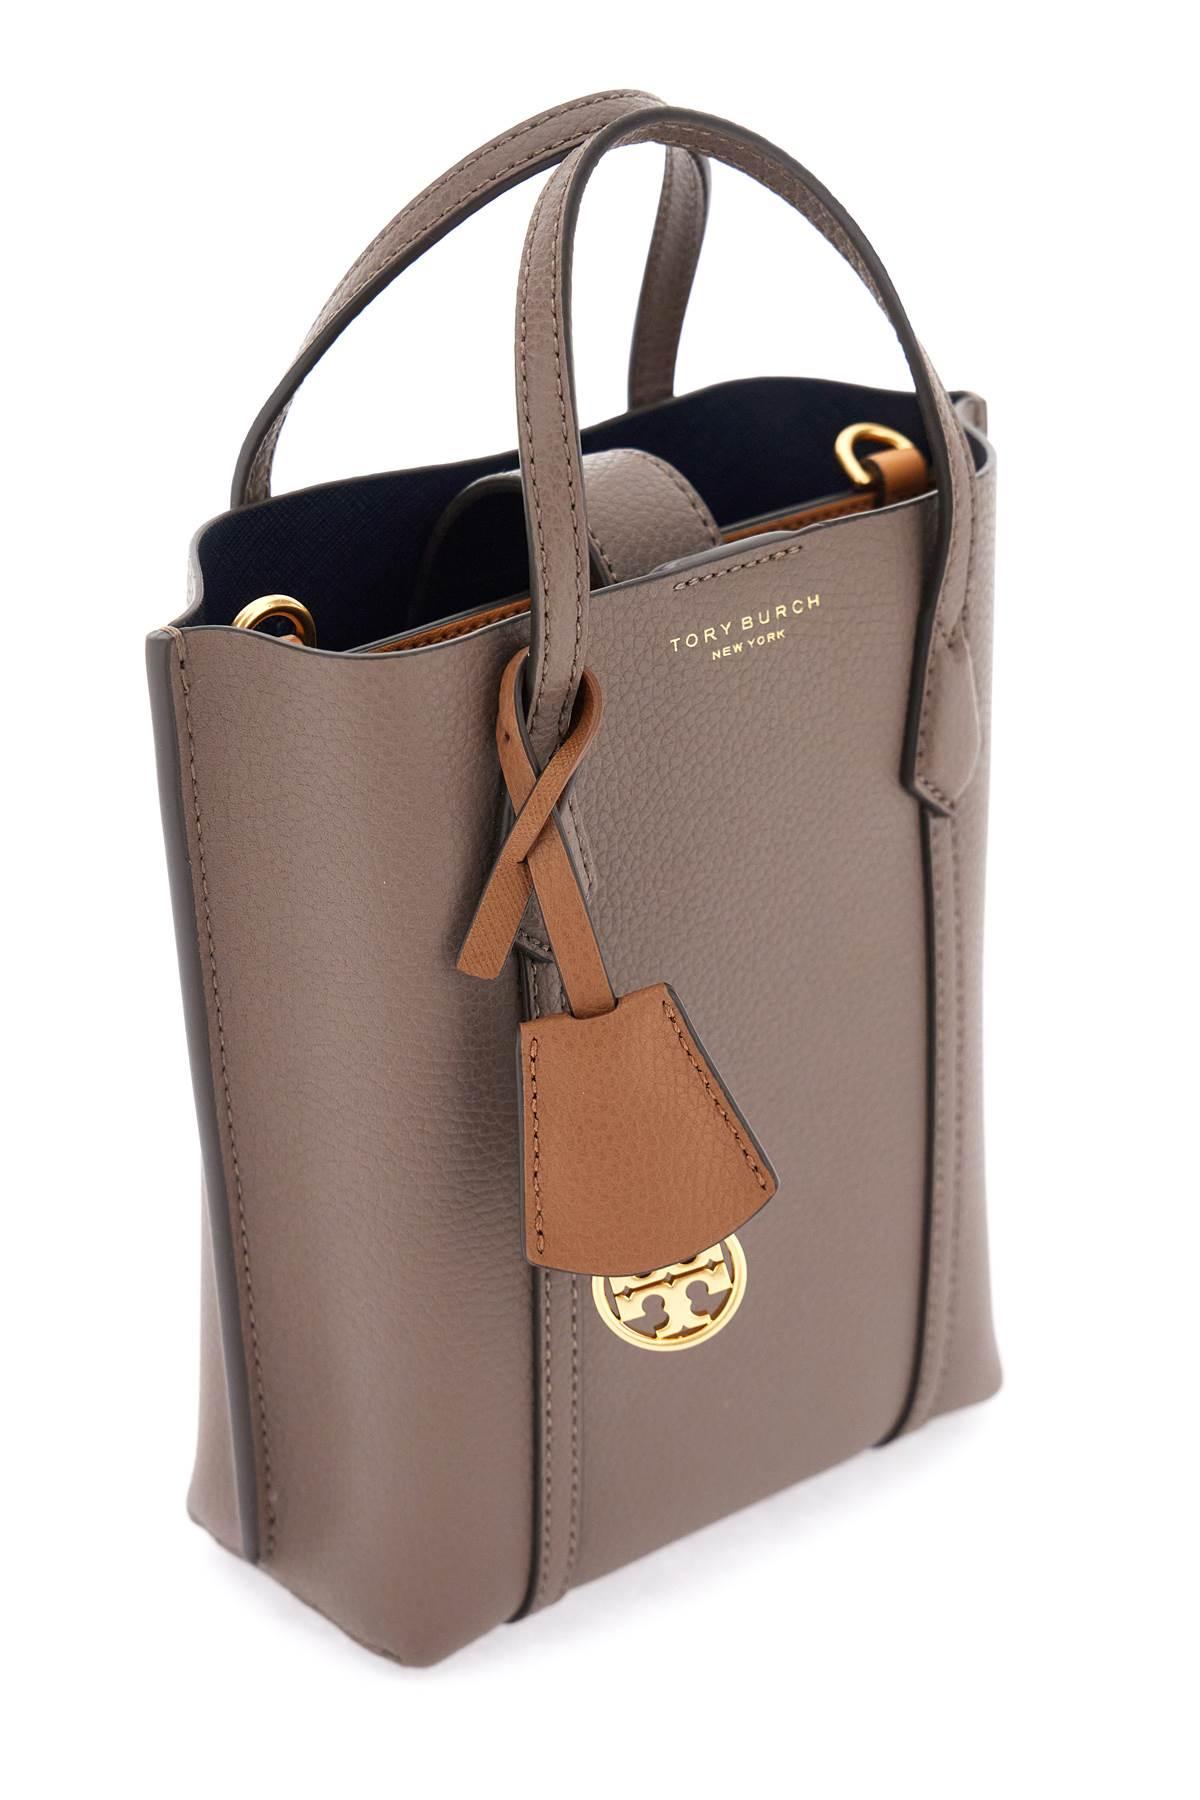 Tory Burch 'perry' Handbag in Brown